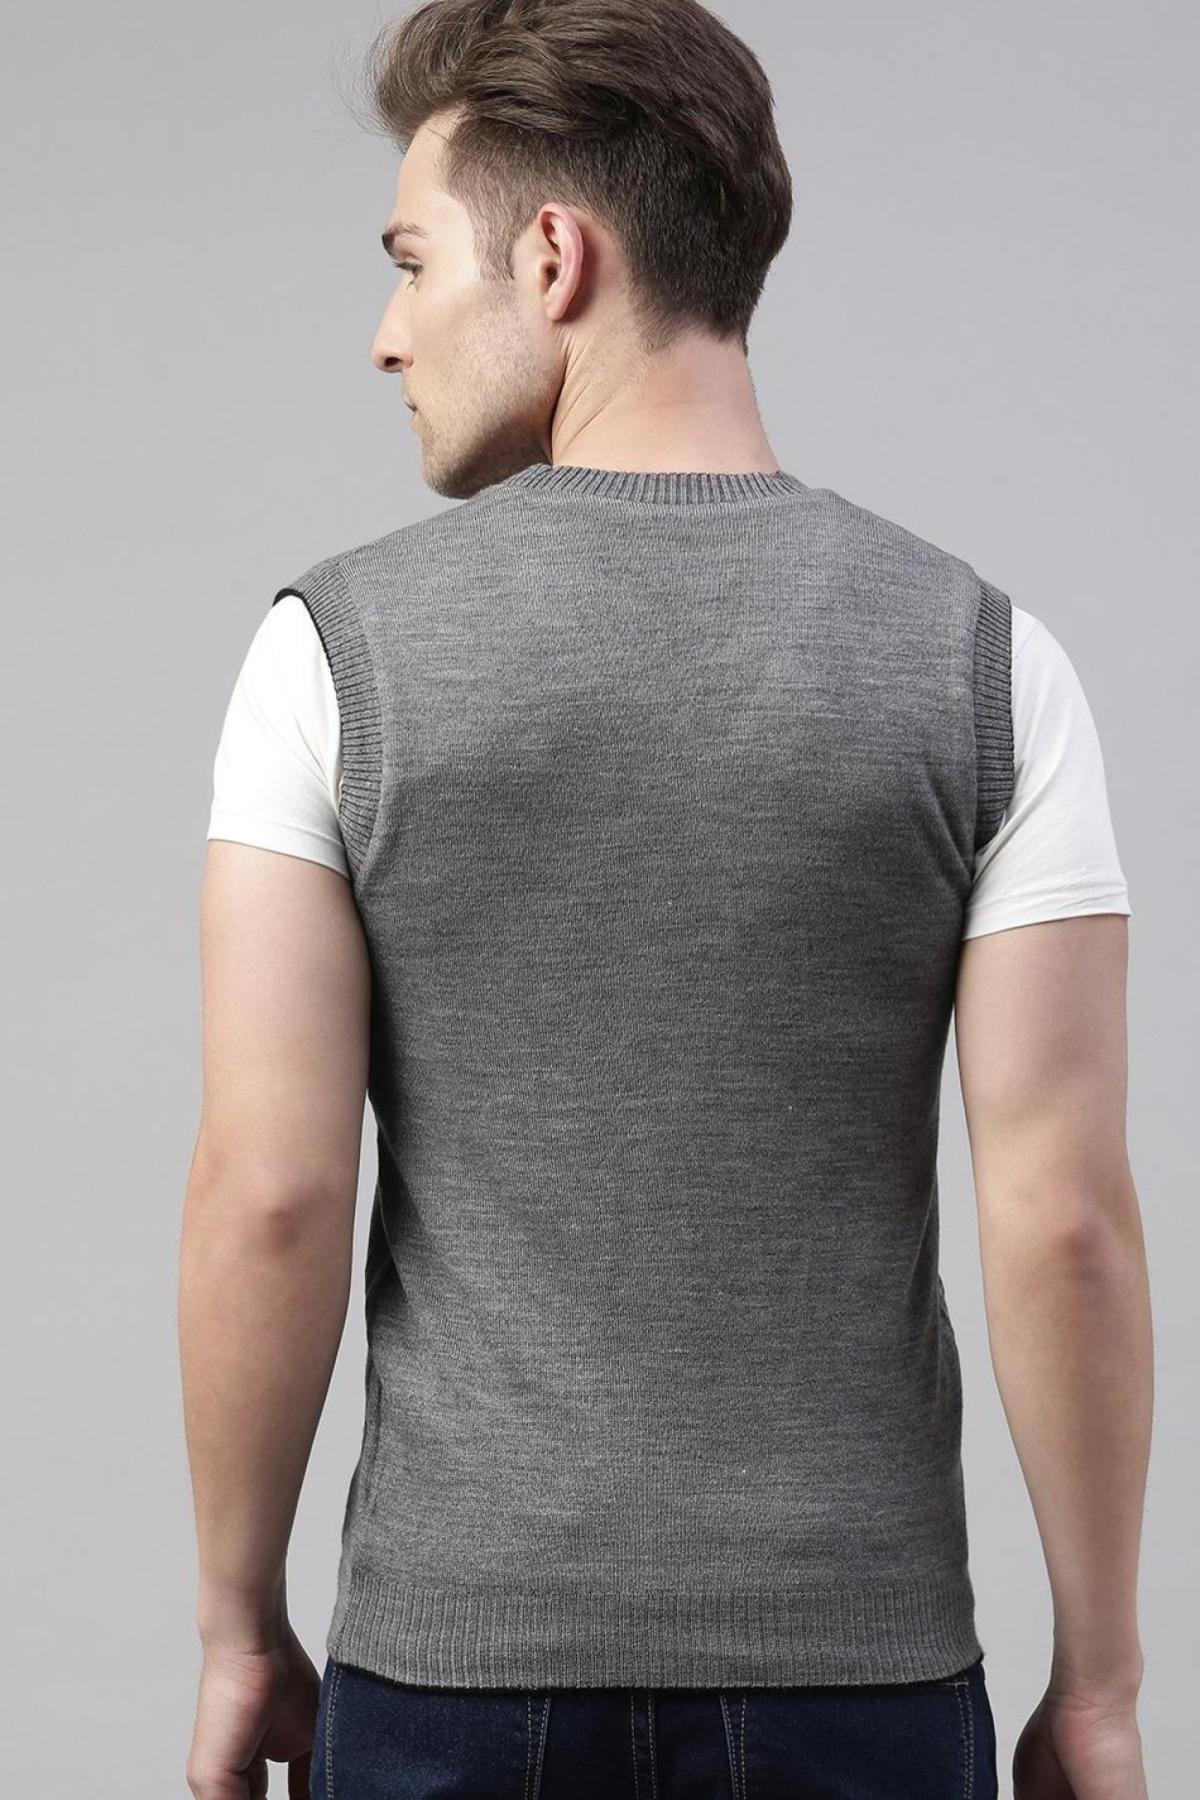 Black & Grey Merino Blend Reversible Sleeveless Sweater|Men